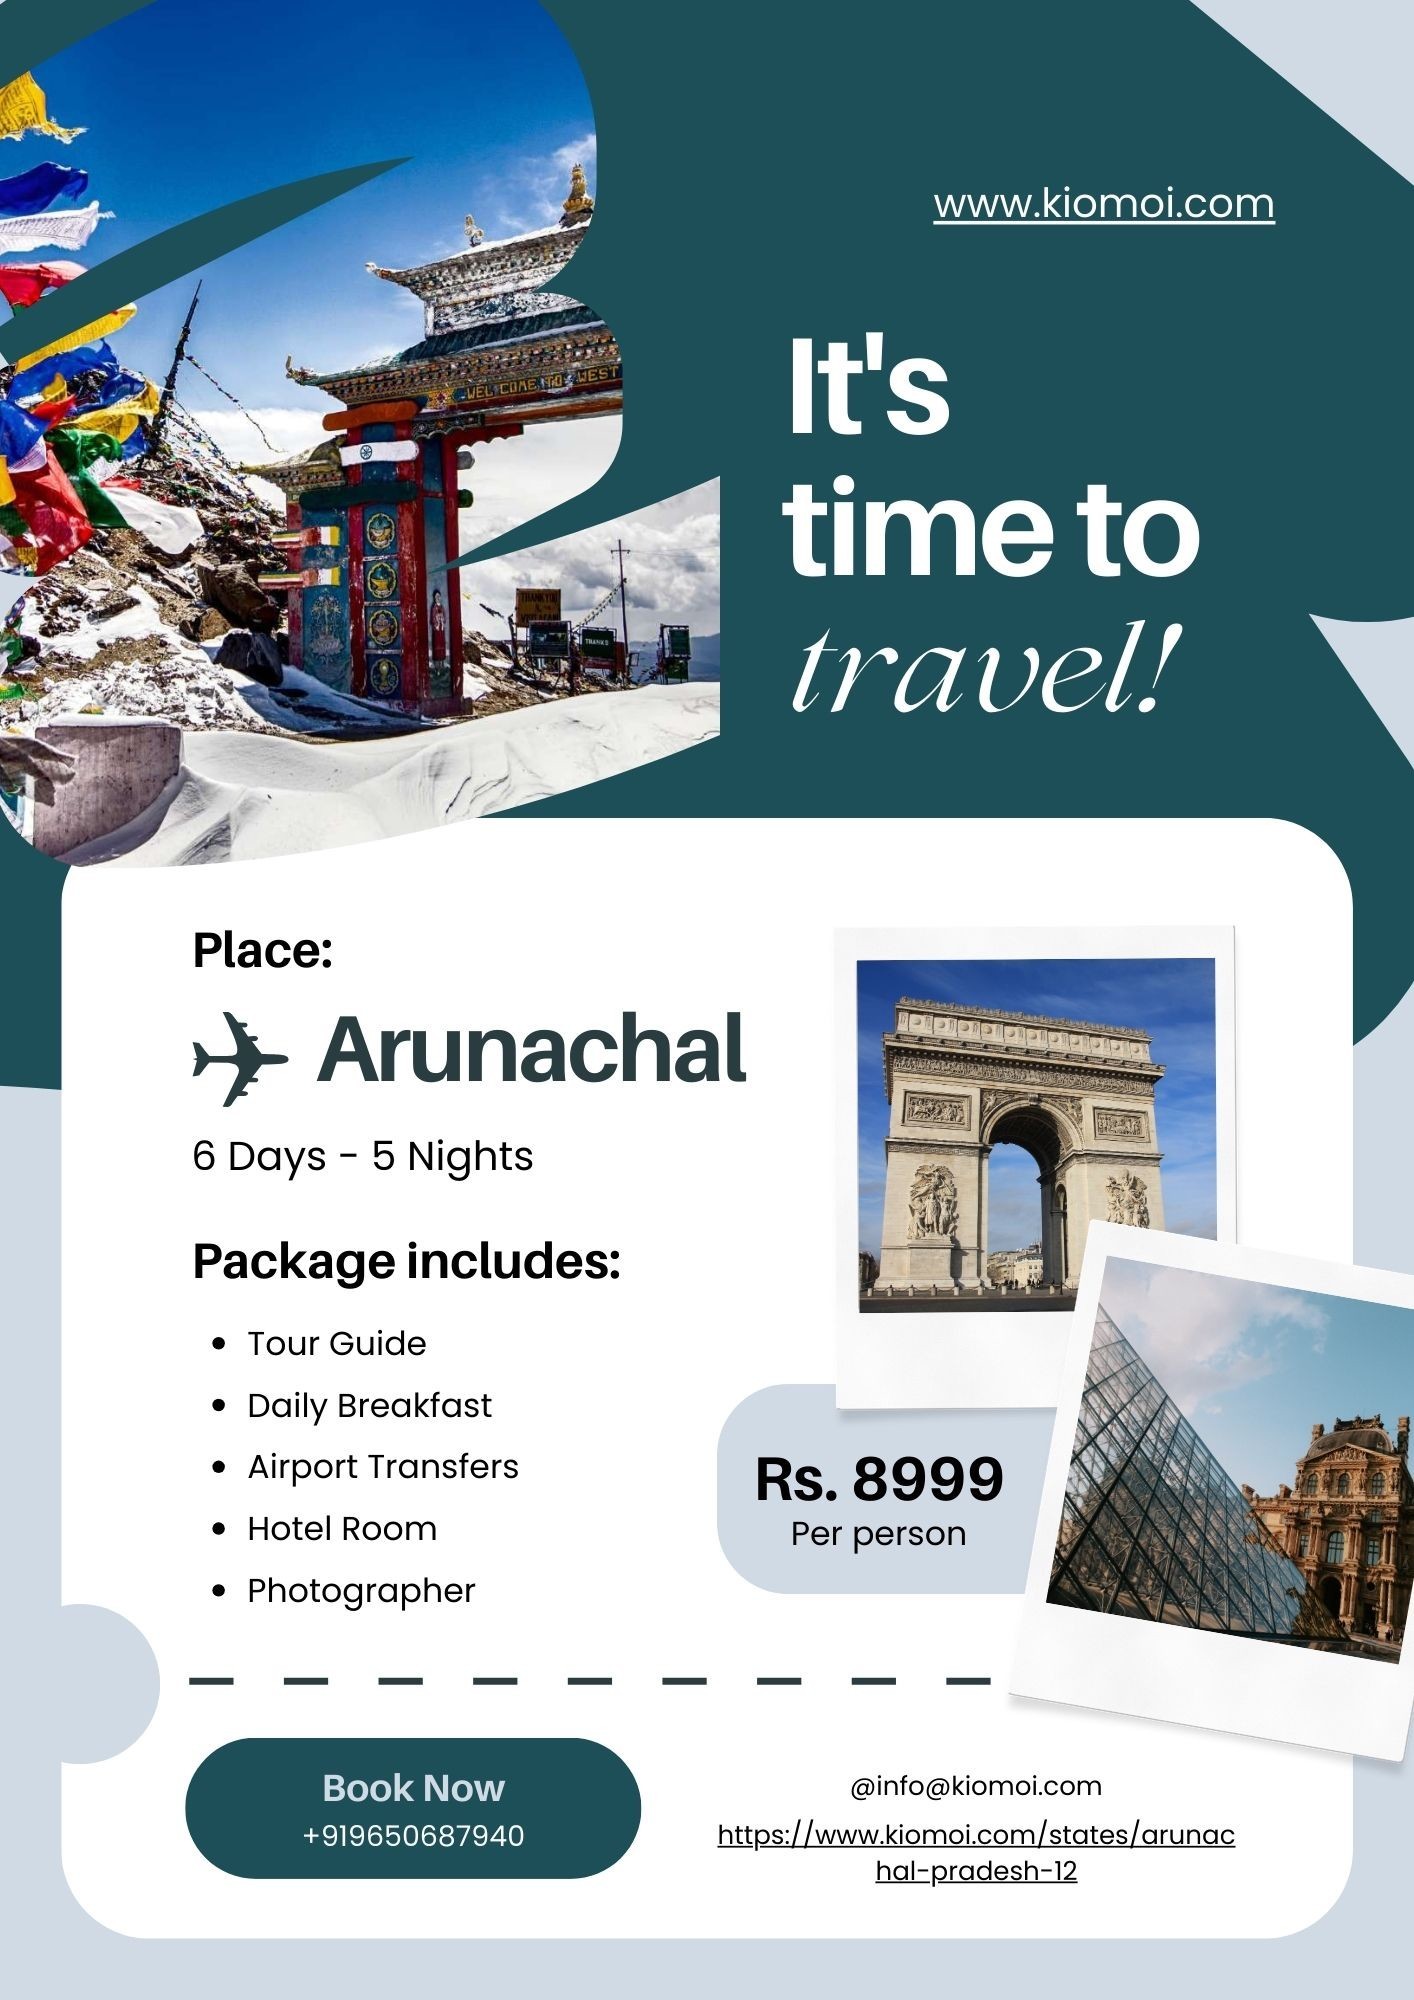 Kiomoi giving 30% discount on Arunachal tour packages